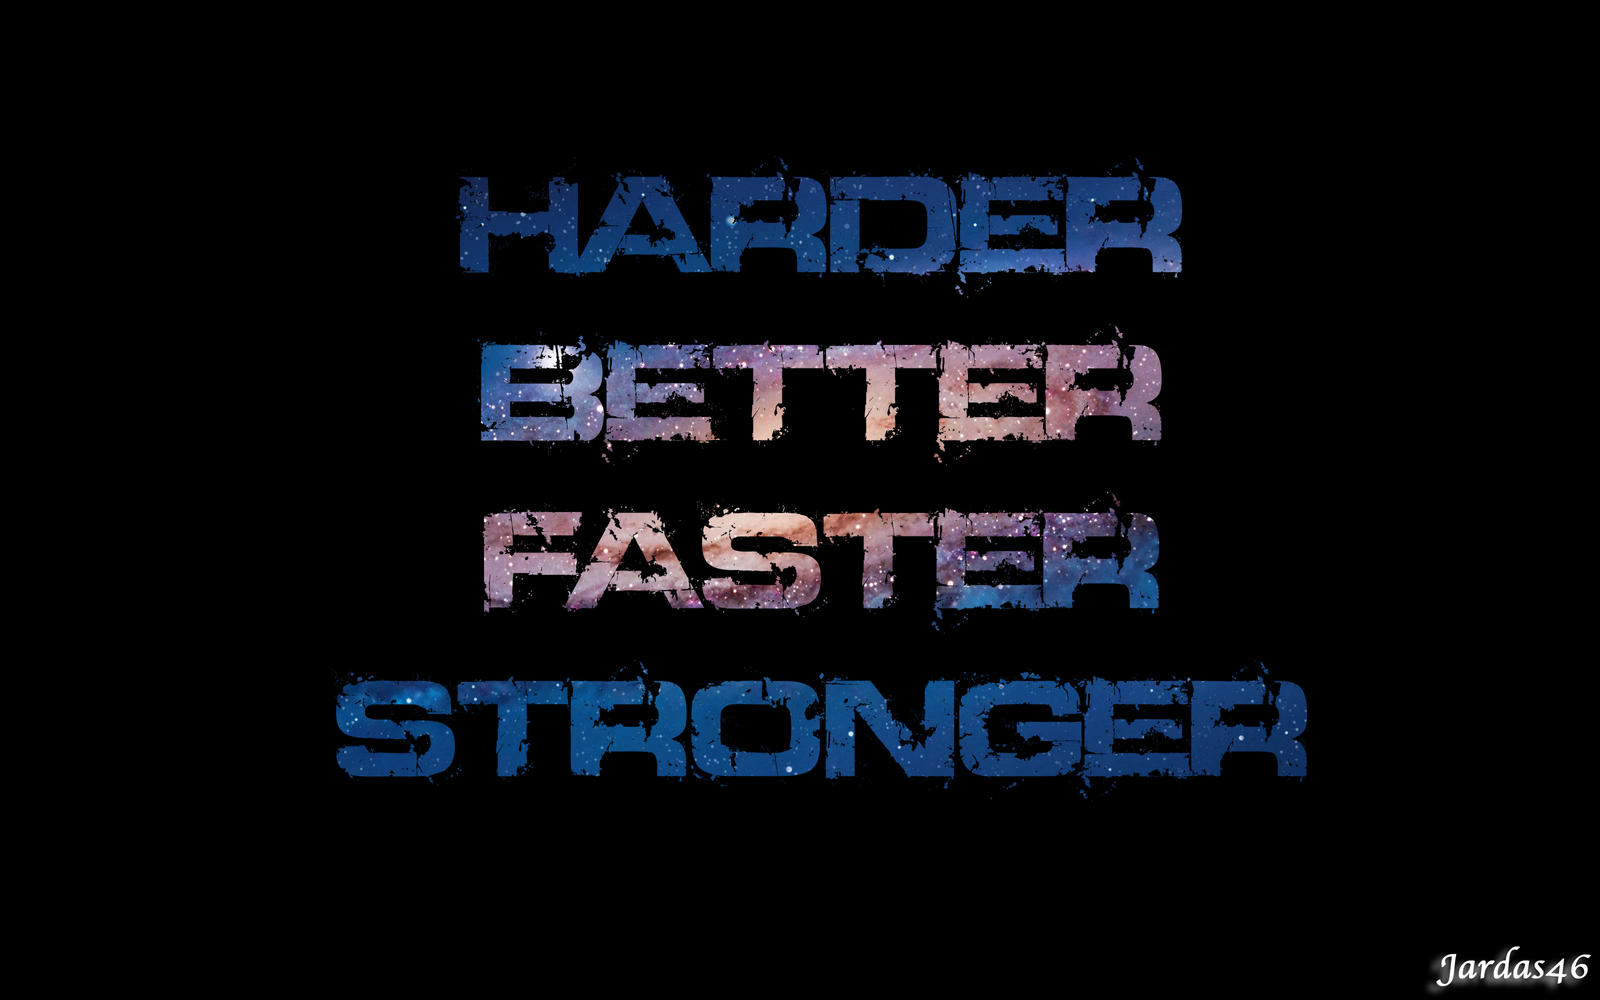 Faster stronger песня ремикс. Better faster. Harder, better, faster, stronger Daft Punk. Хардер беттер Фастер стронгер.